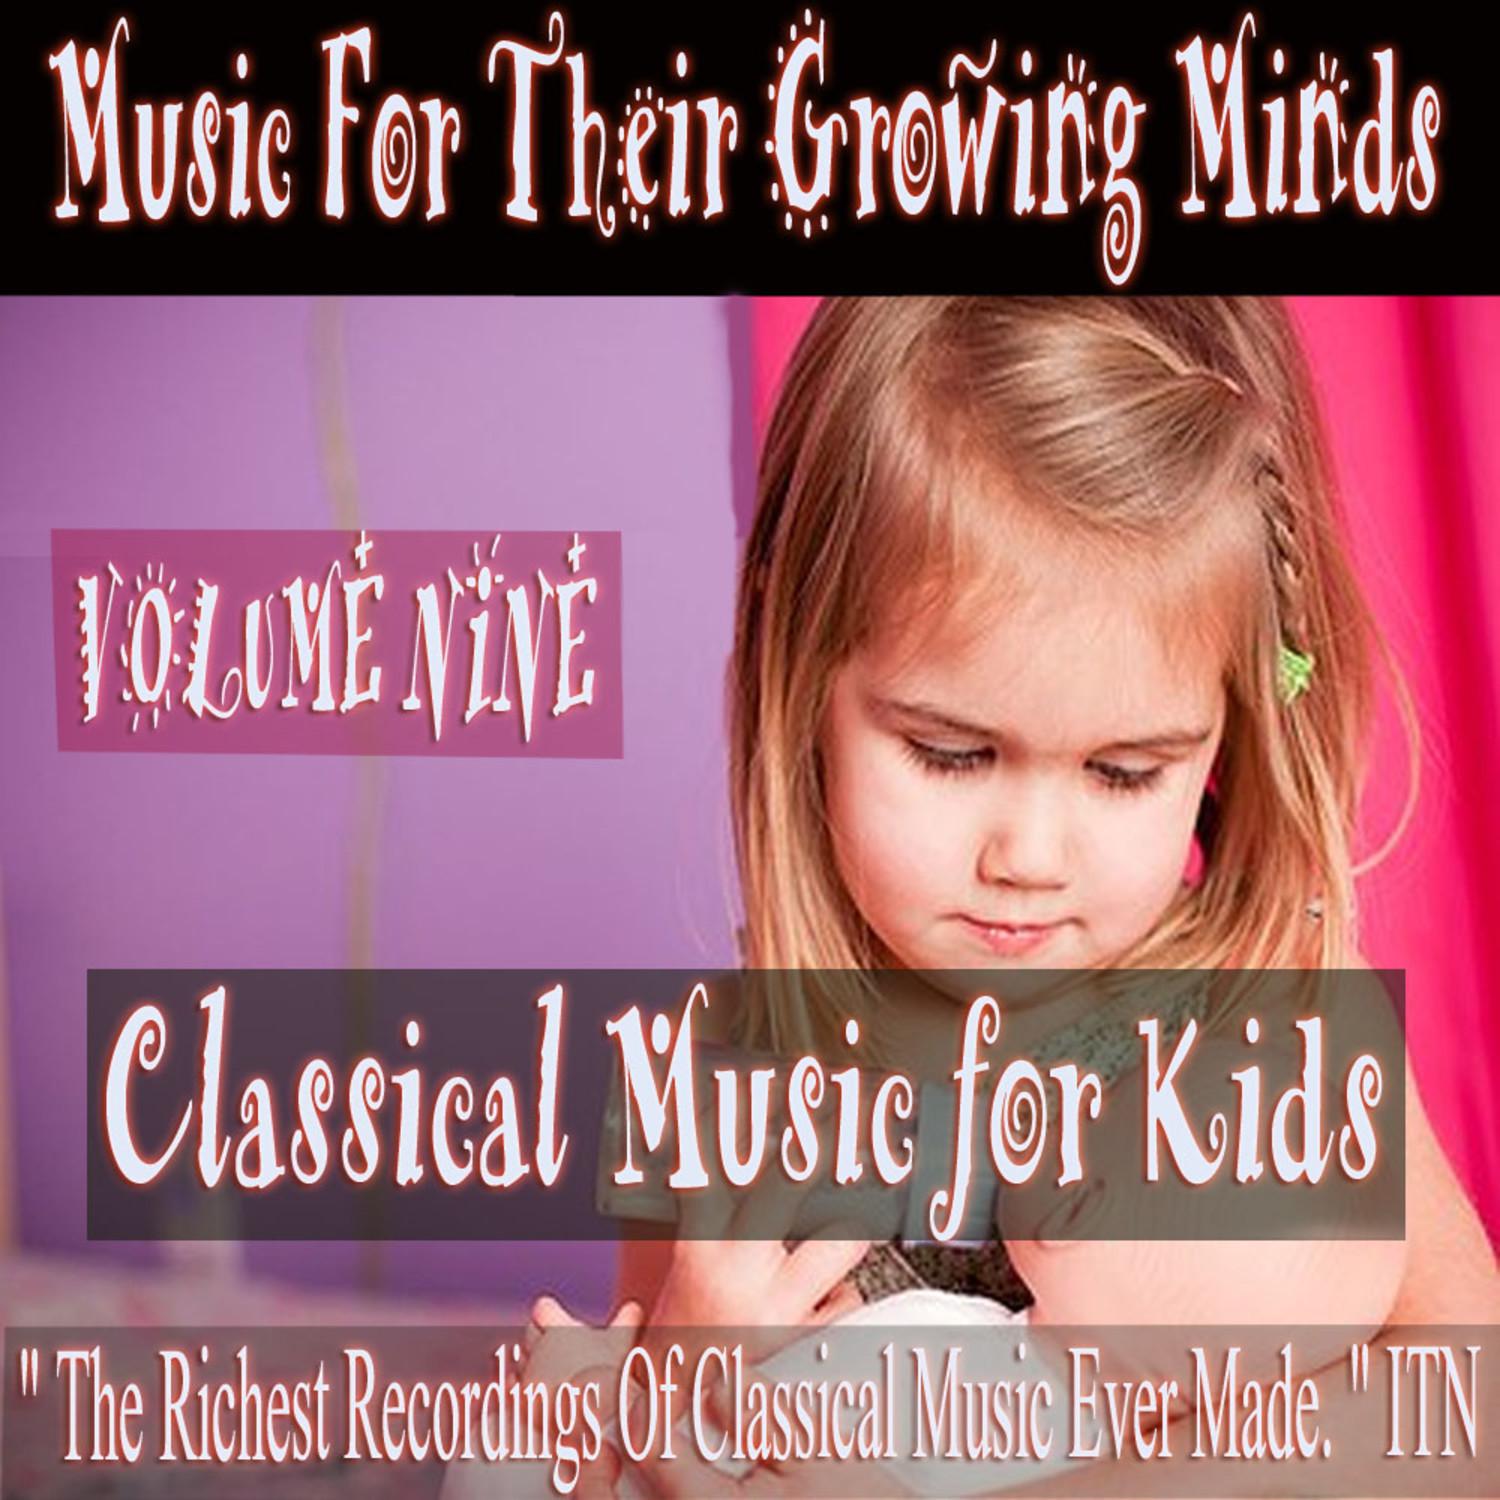 Classical Music for Kids Volume Nine